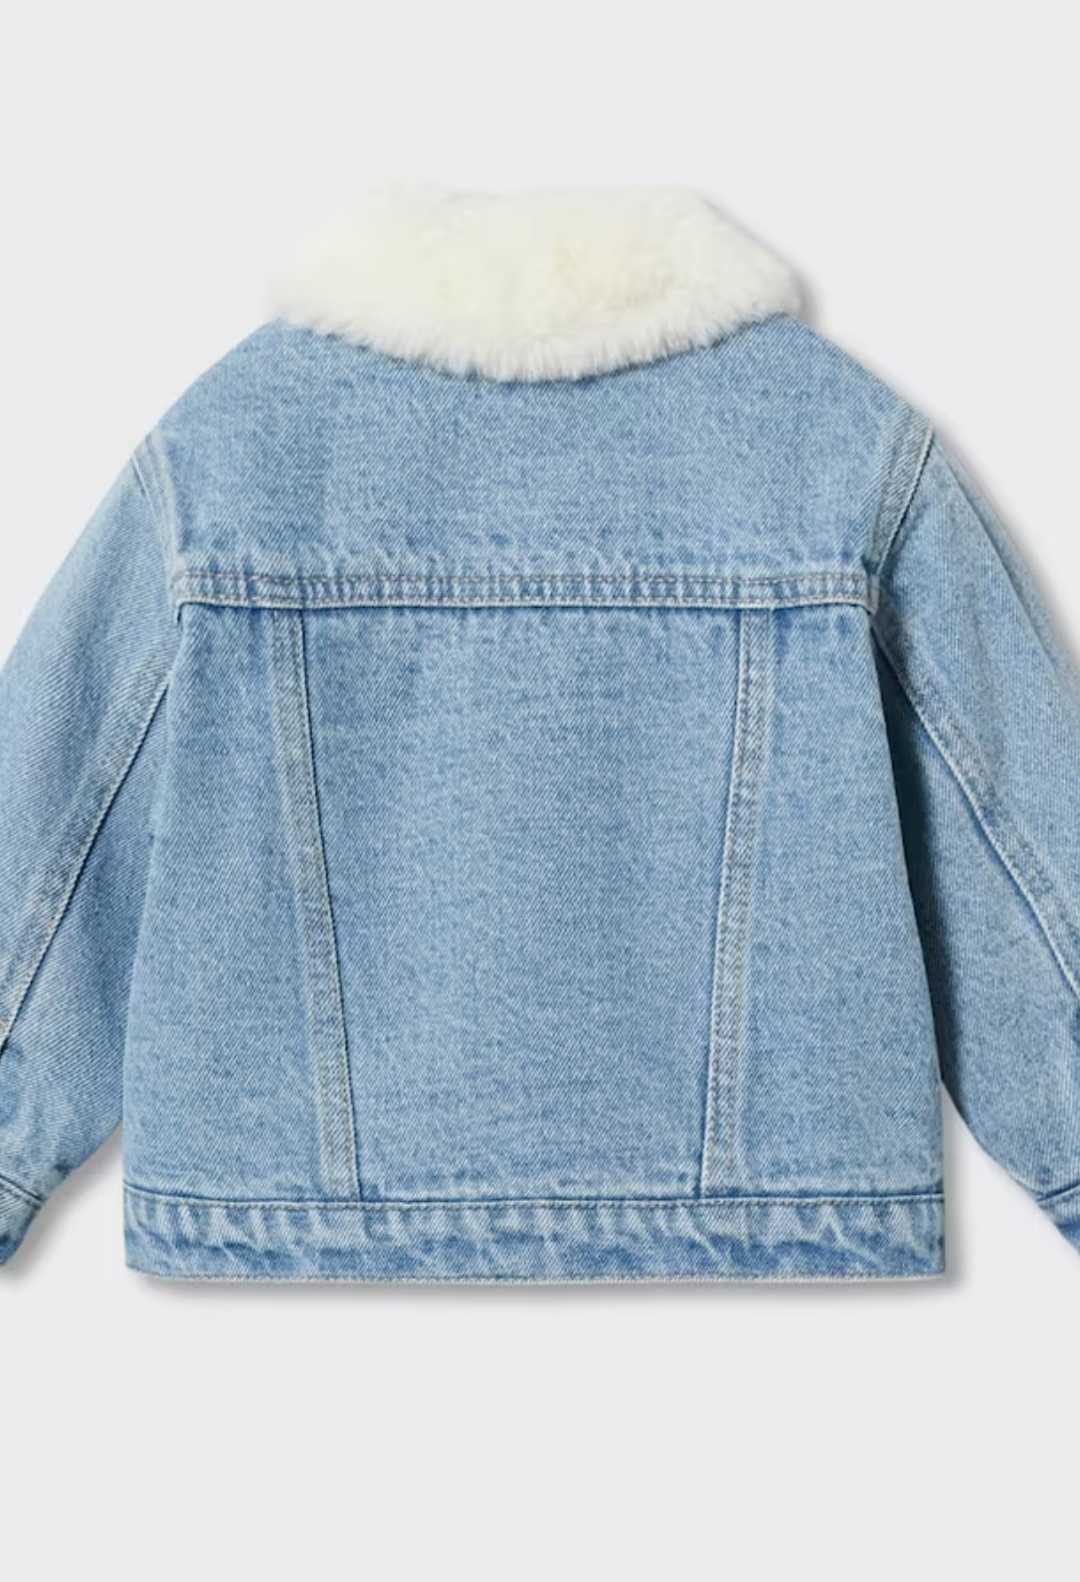 jacheta blugi geaca copii 104-110  4-6 ani